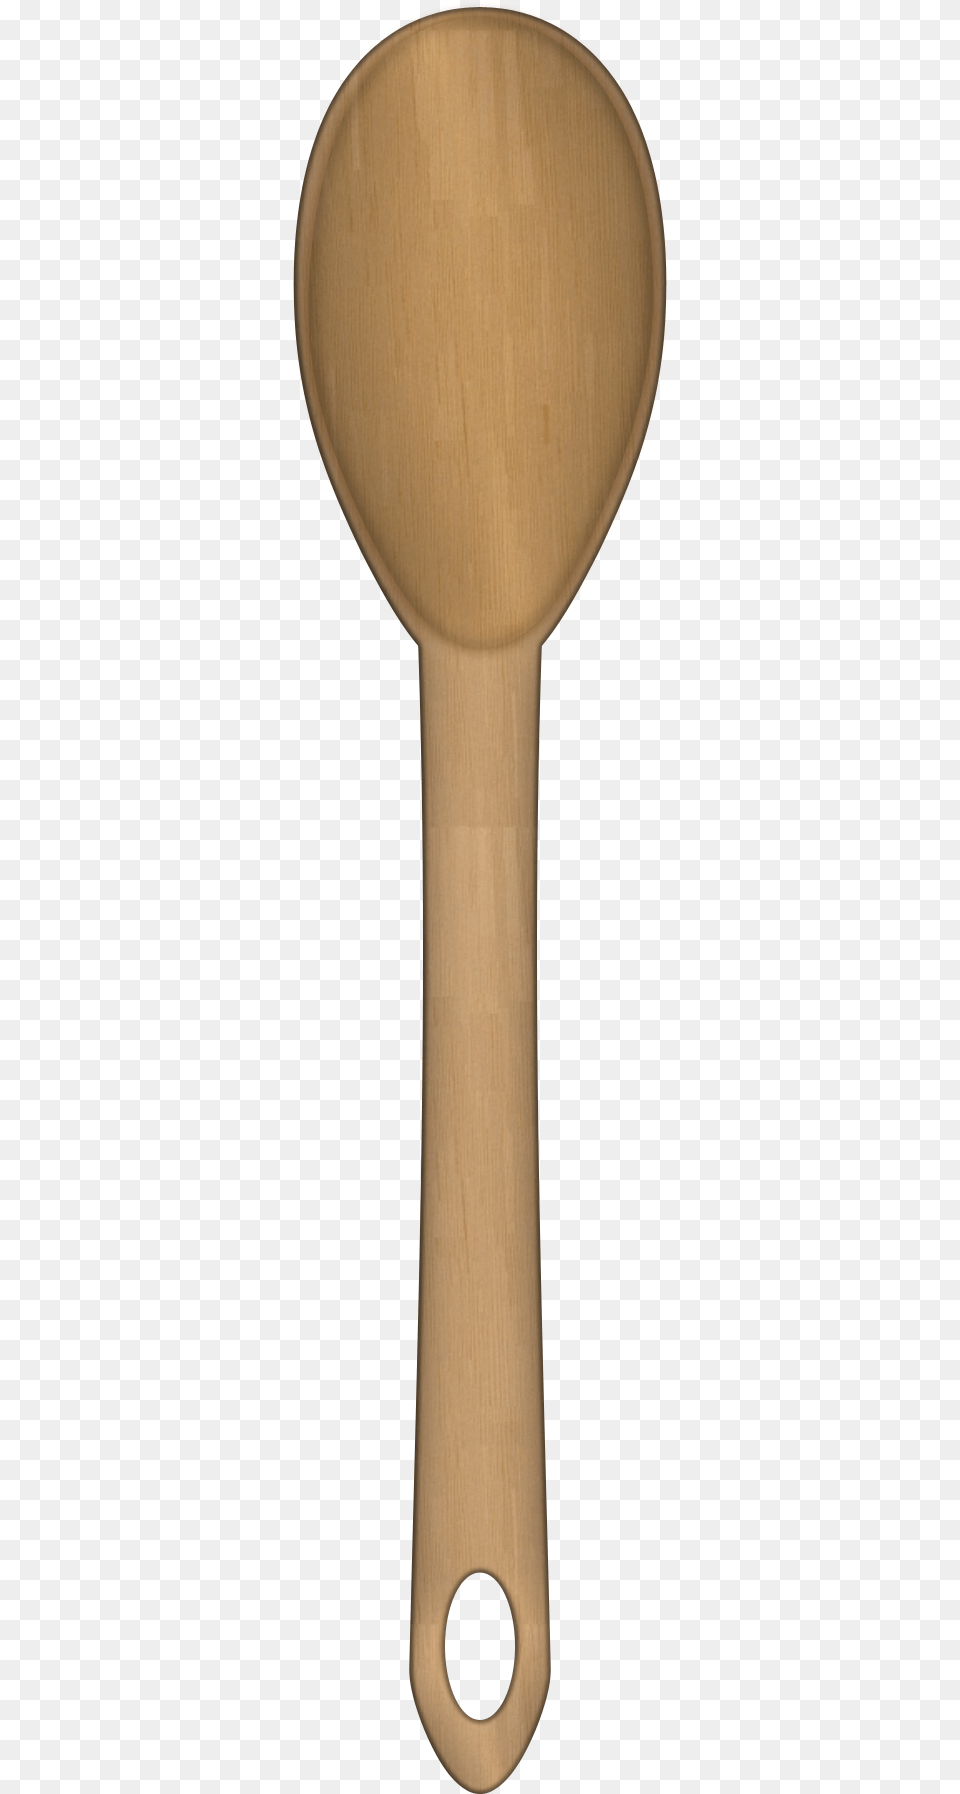 Wooden Spoon By Blueamnesiac Wood Spoon Vector, Cutlery, Kitchen Utensil, Wooden Spoon, Mace Club Png Image